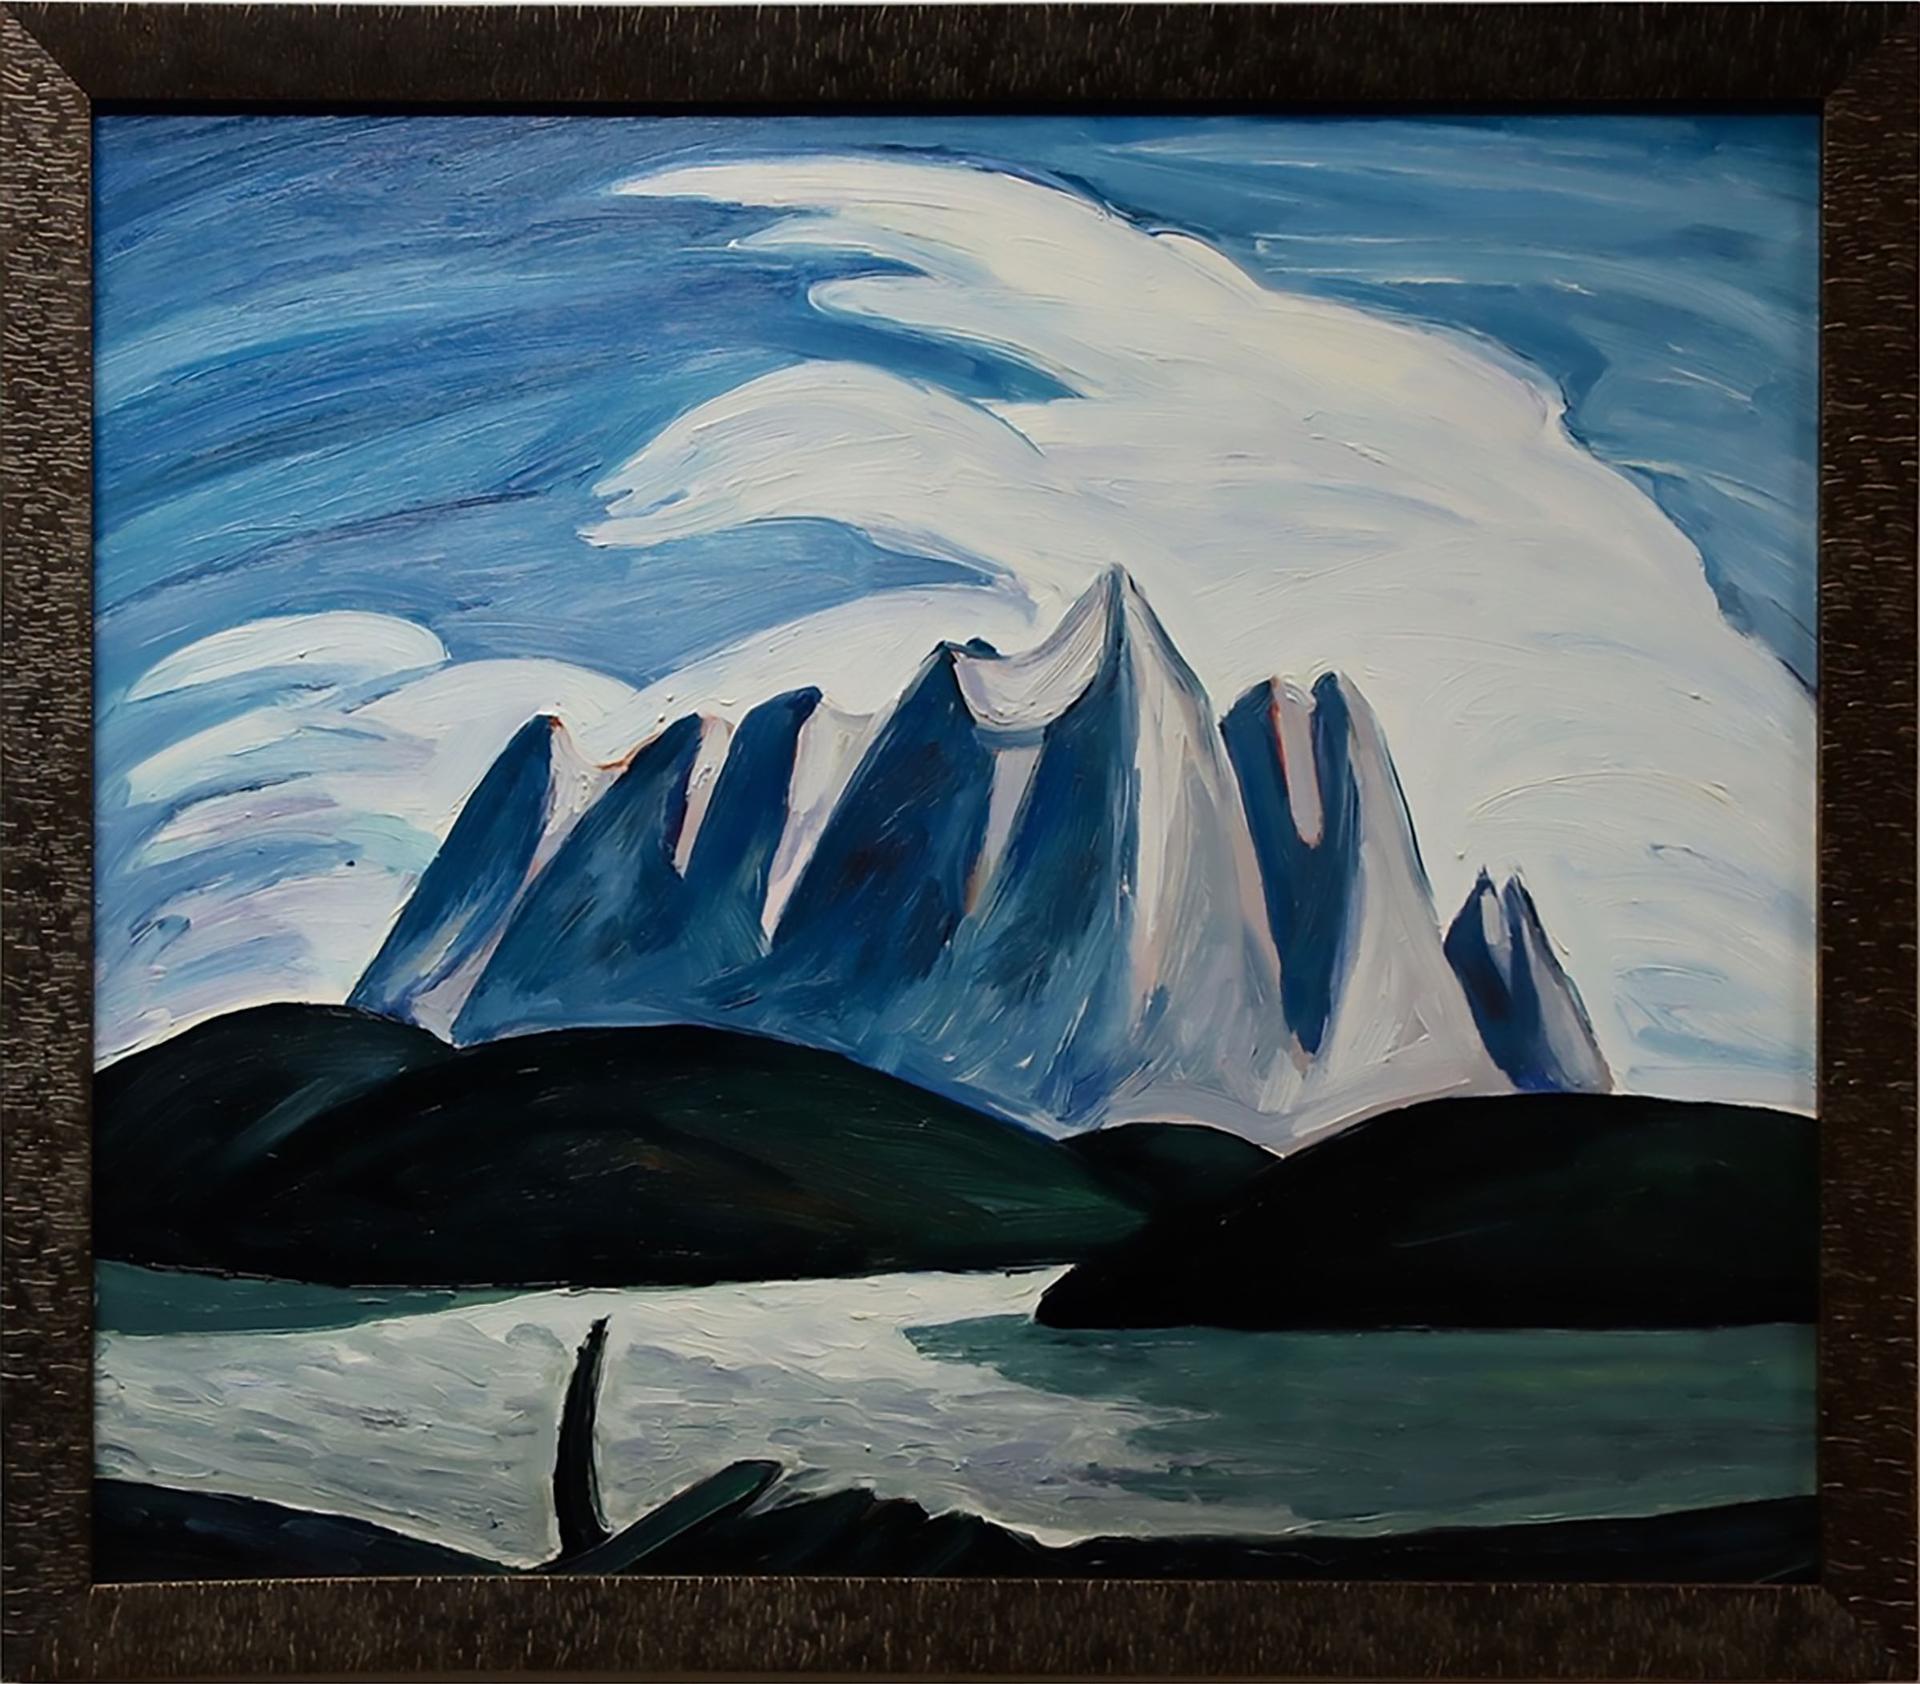 Serge Deherian (1955) - Untitled (Lake & Mountains)